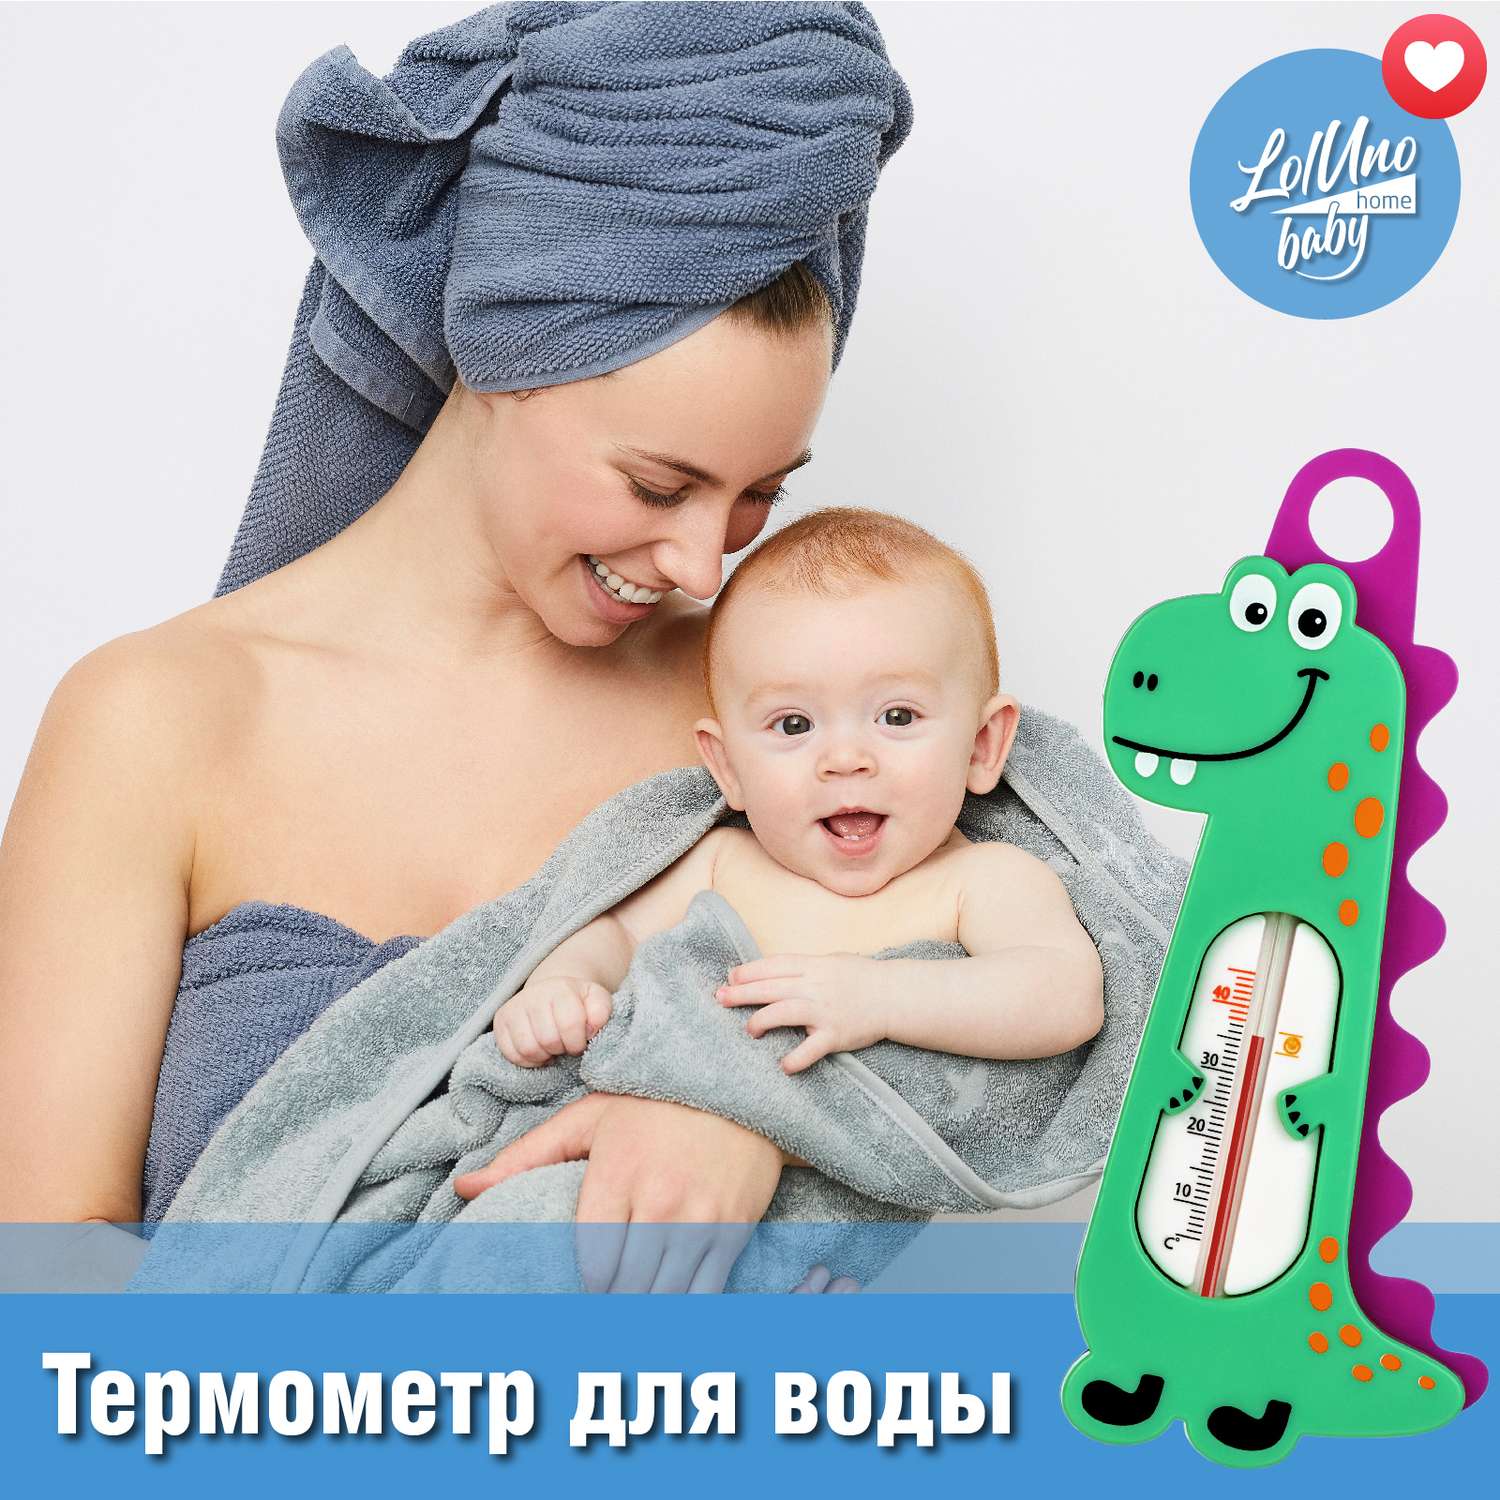 Термометр для воды LolUno Home baby детский - фото 7